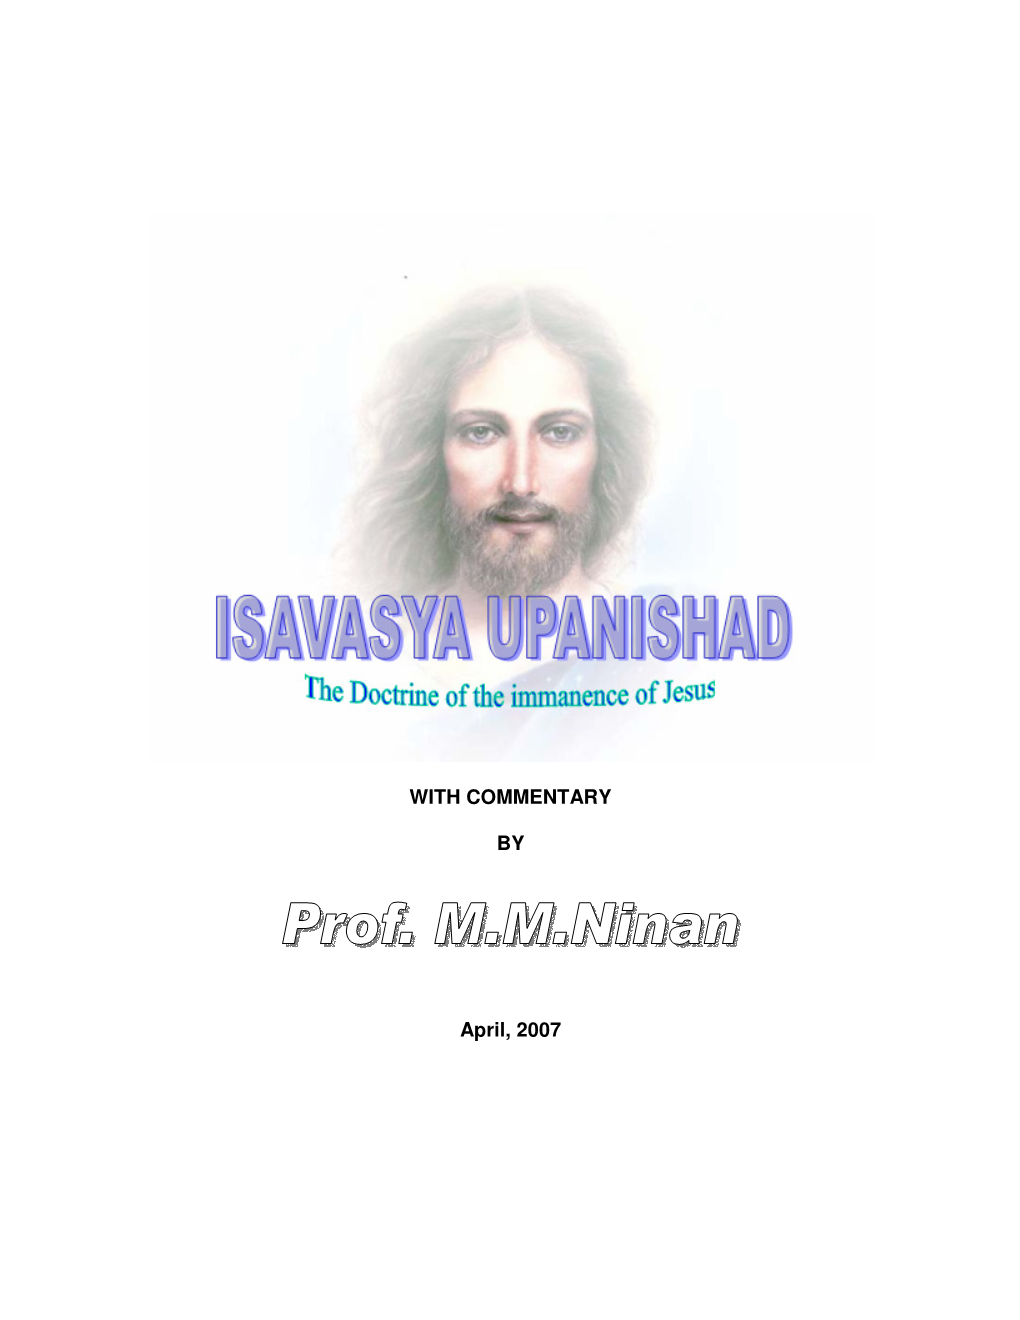 Insavasyopanishad Jesus